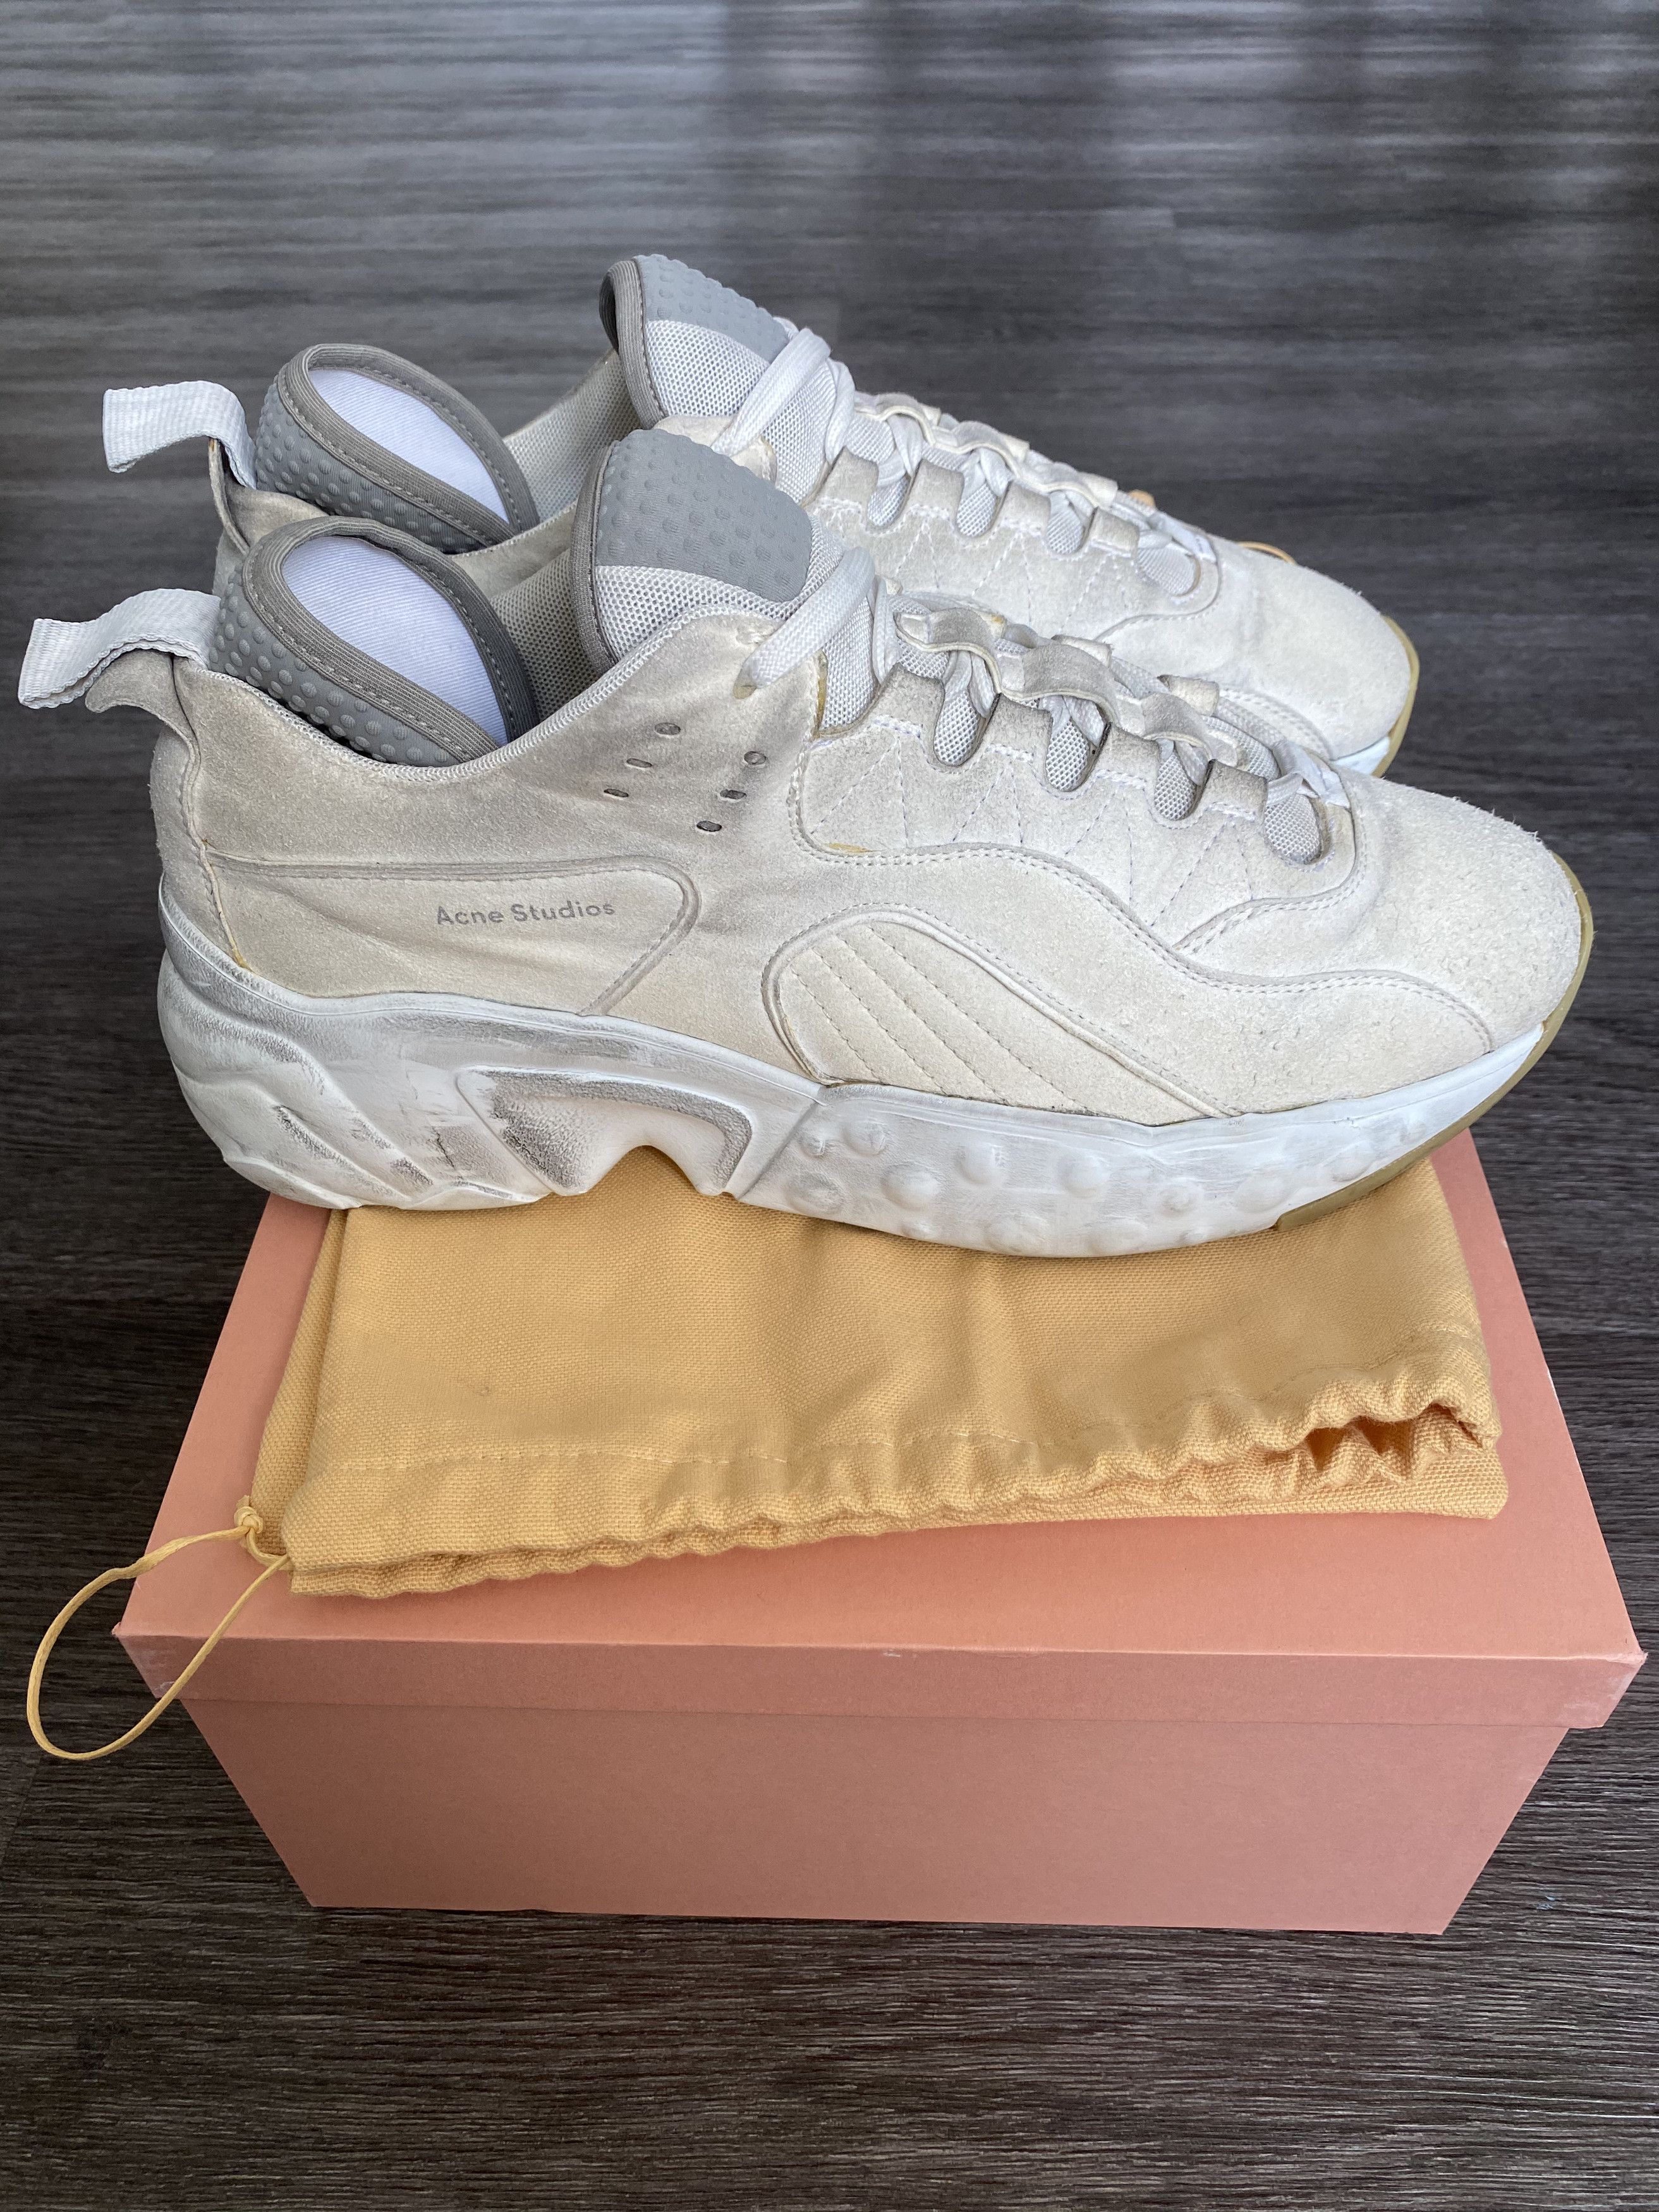 Acne Studios Acne Studios Rockaway Tumbled sneakers white | Grailed